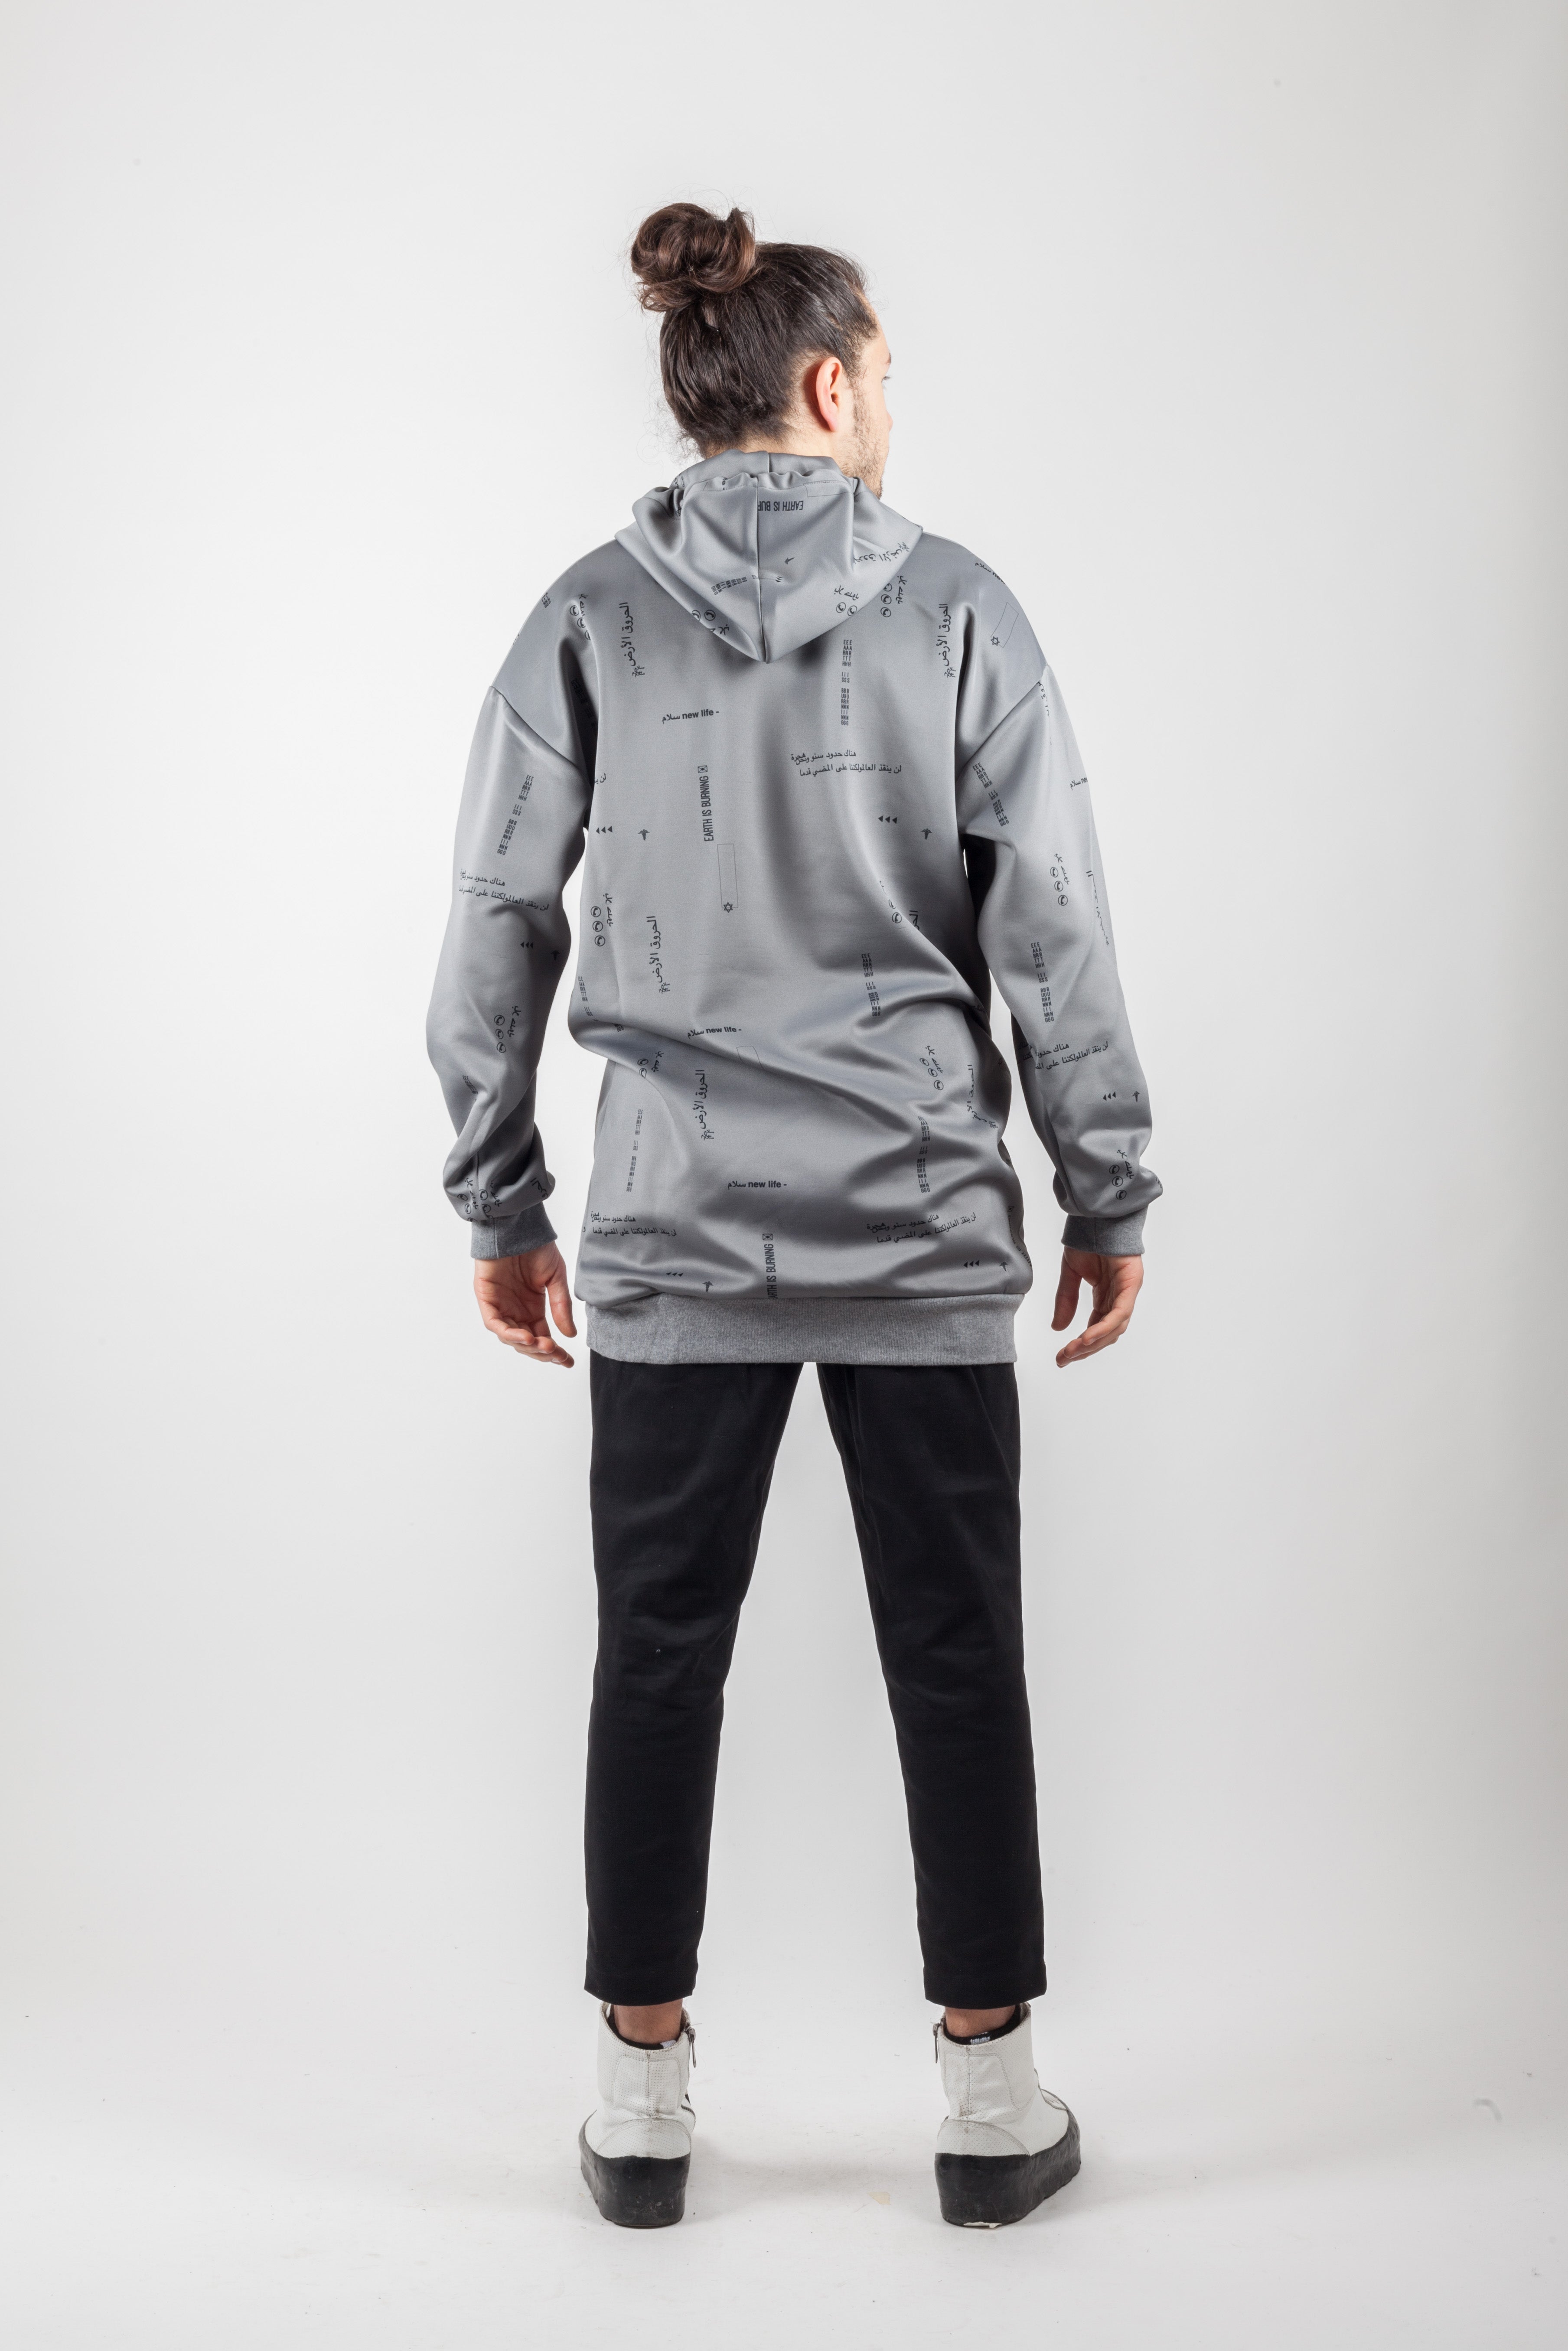 Grey over Sweatshirt - Natural Born Humans Store